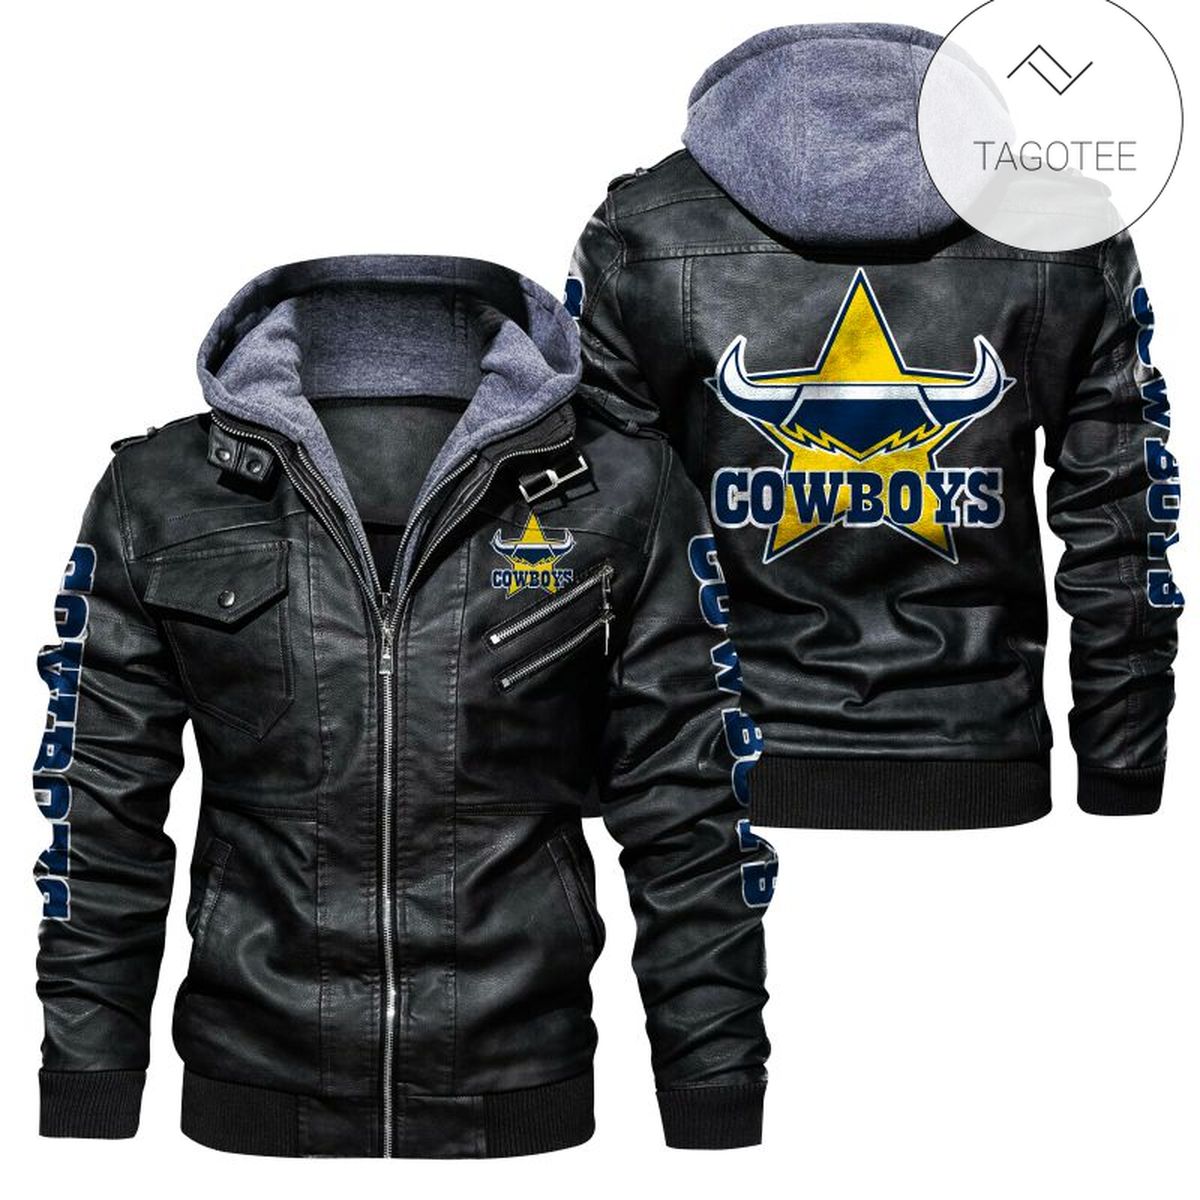 North Queensland Cowboys NRL Leather Jacket